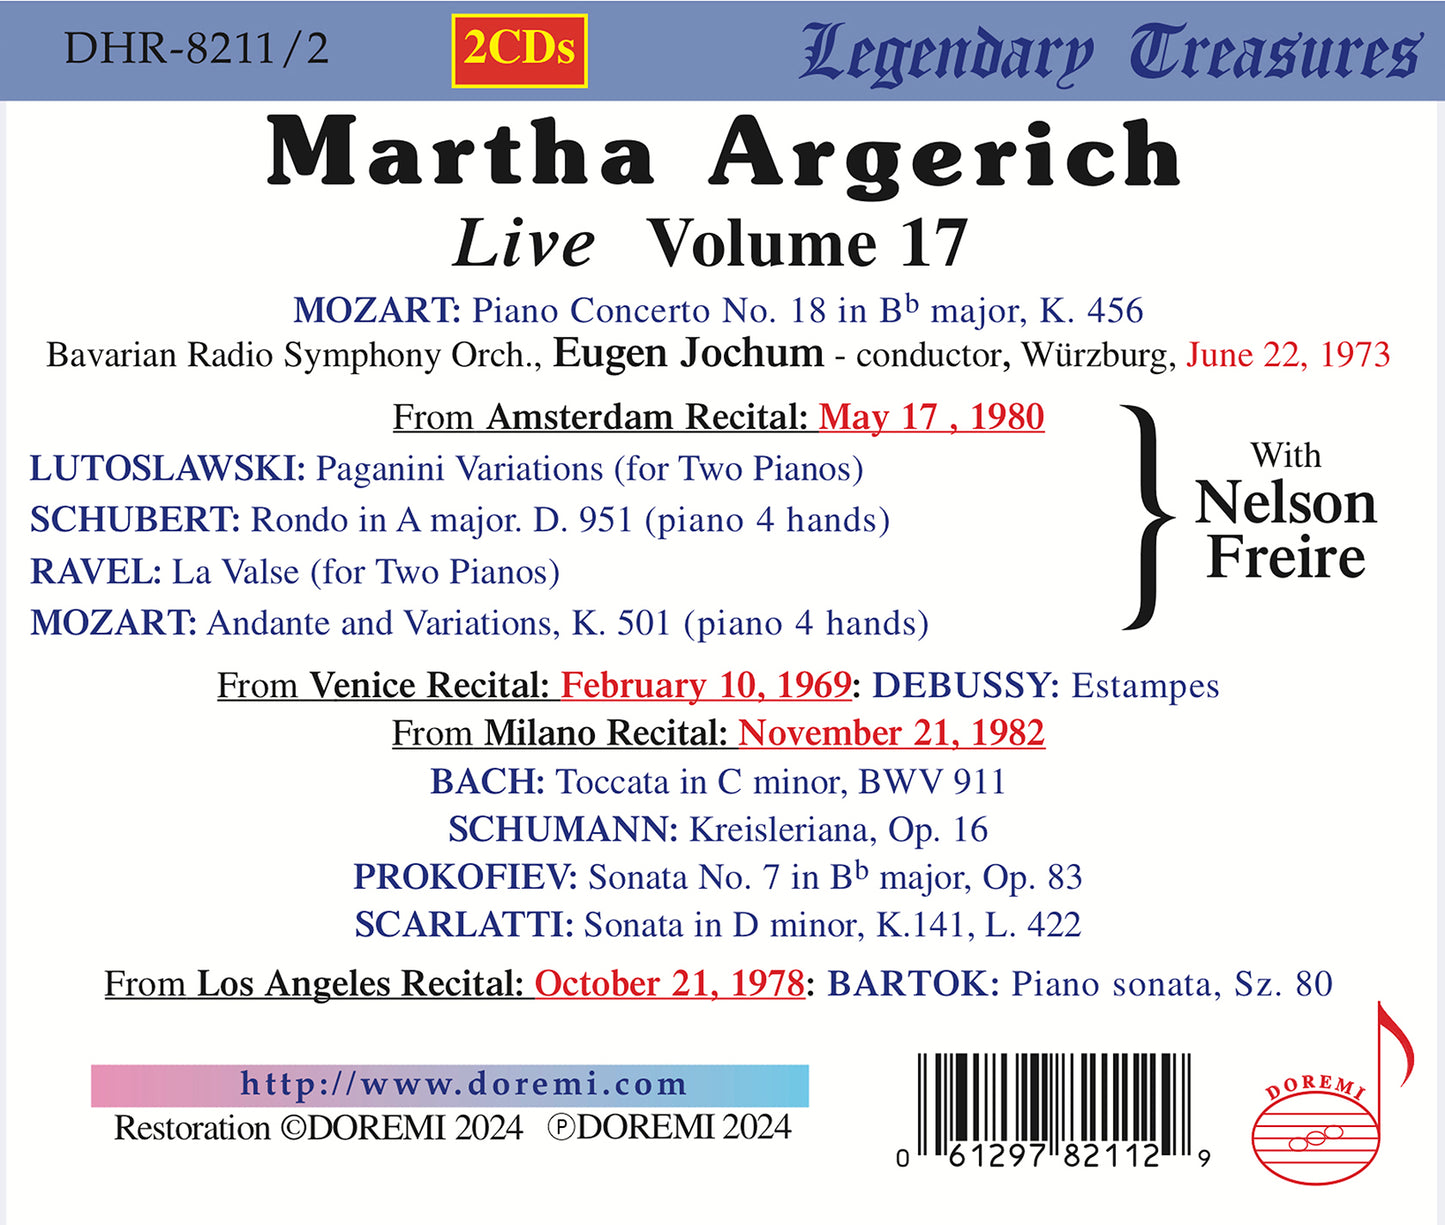 Martha Argerich Live, Vol. 17